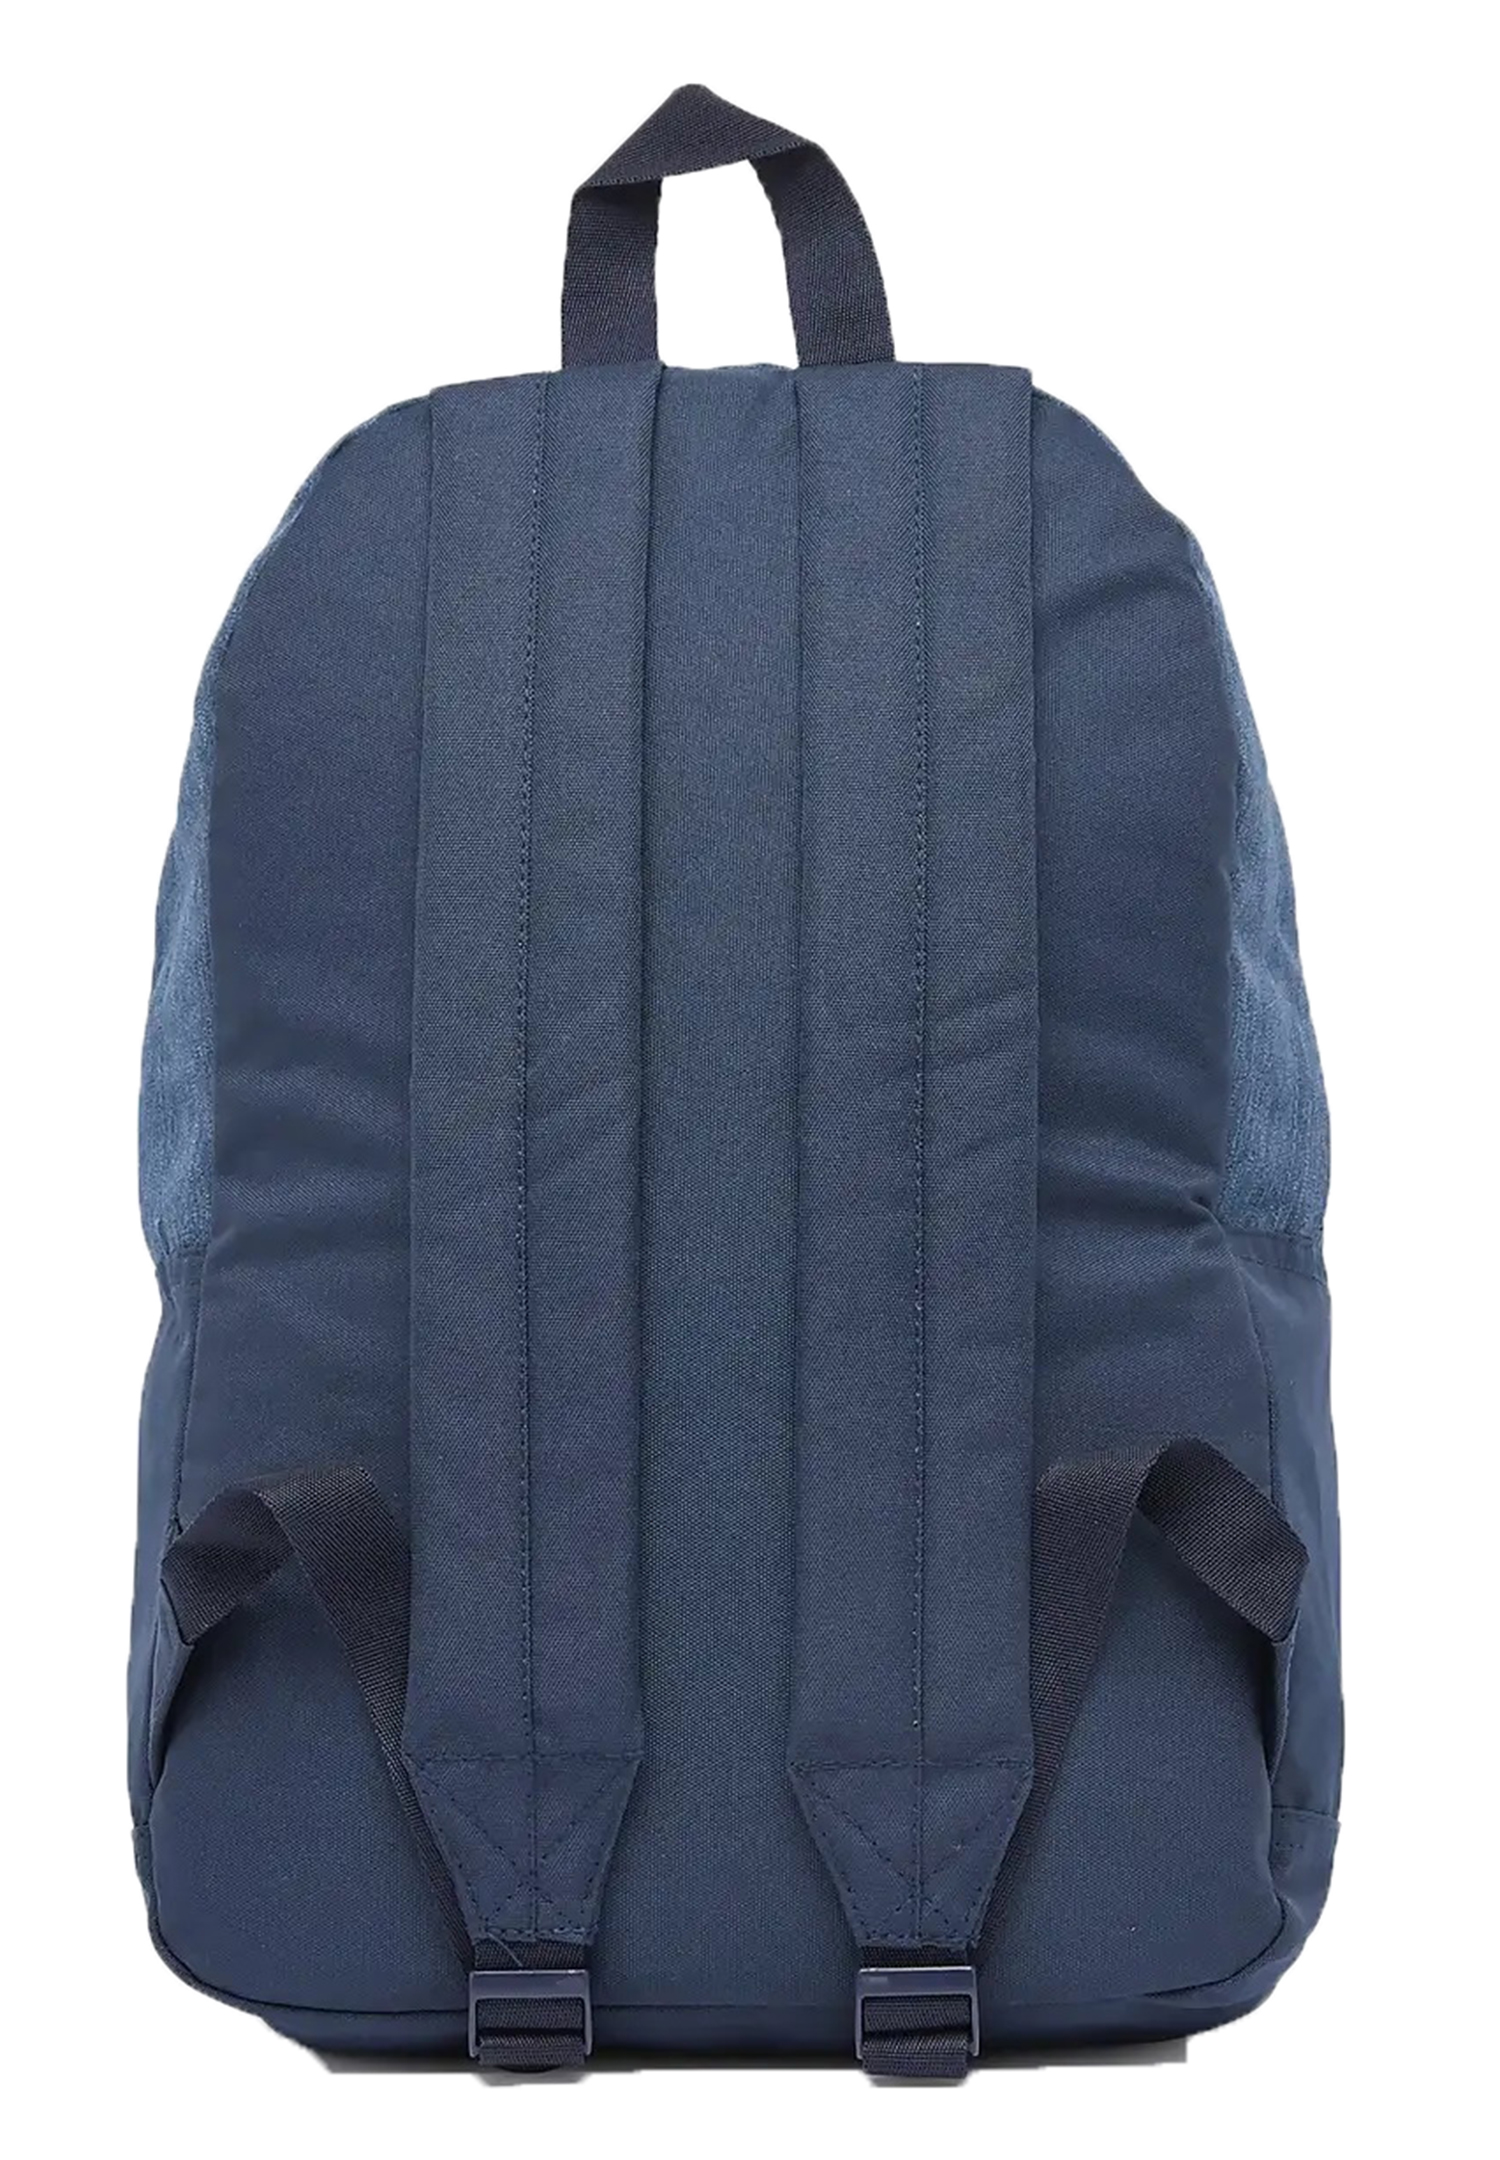 Ellesse Regent Backpack Rucksack Sport Freizeit Reise Schule SAAY0540 blau